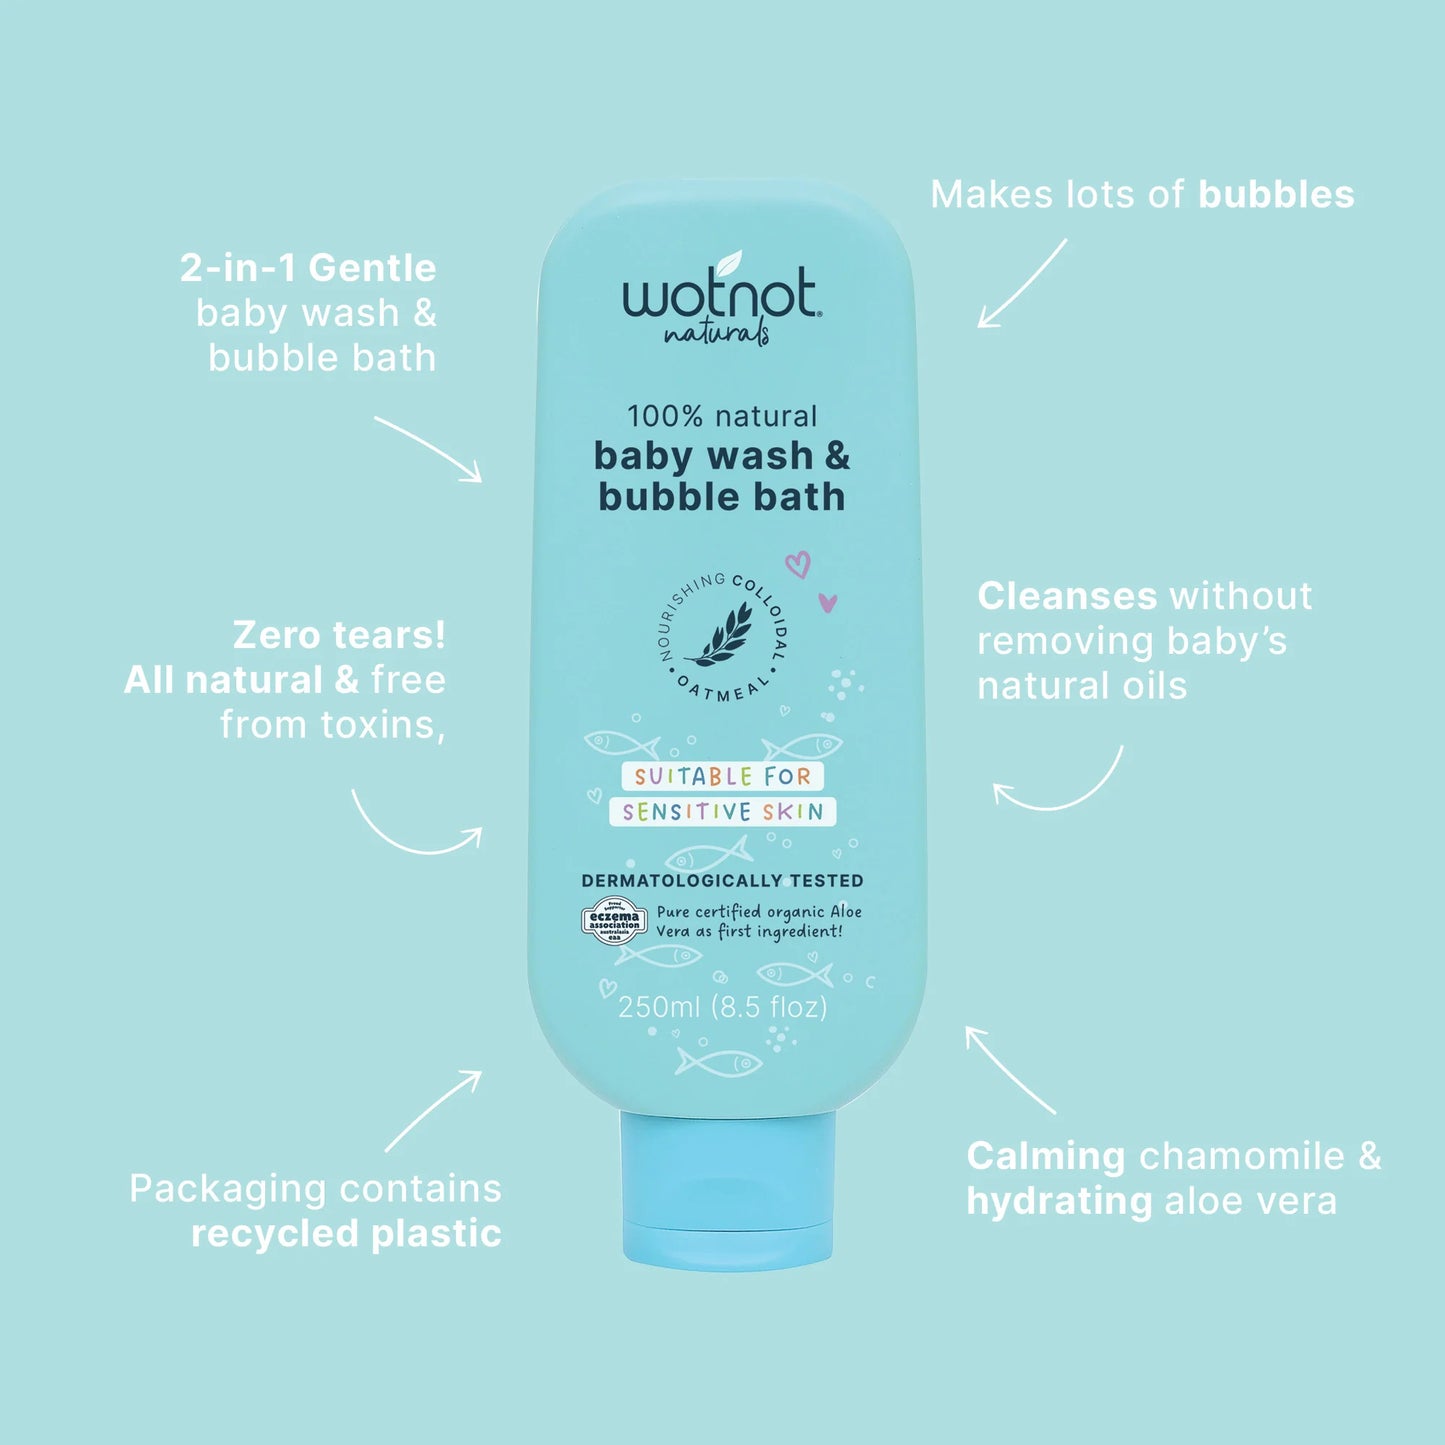 Wotnot 100% Natural Baby Wash & Bubble Bath